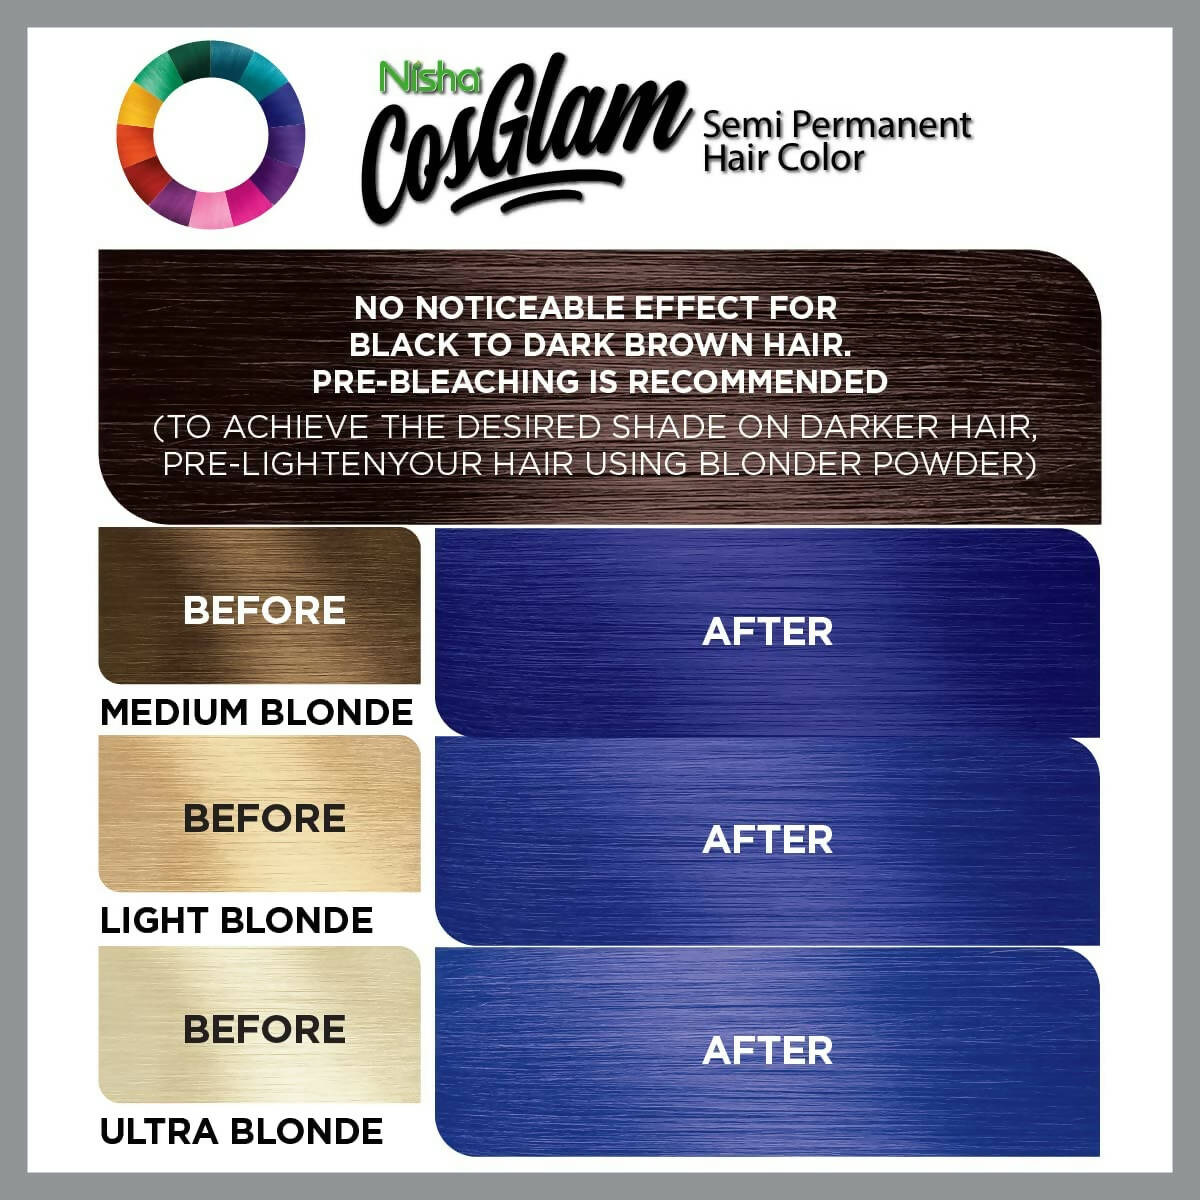 Nisha Cosglam Semi Permanent Hair Color 51 Wonder Blue - Distacart